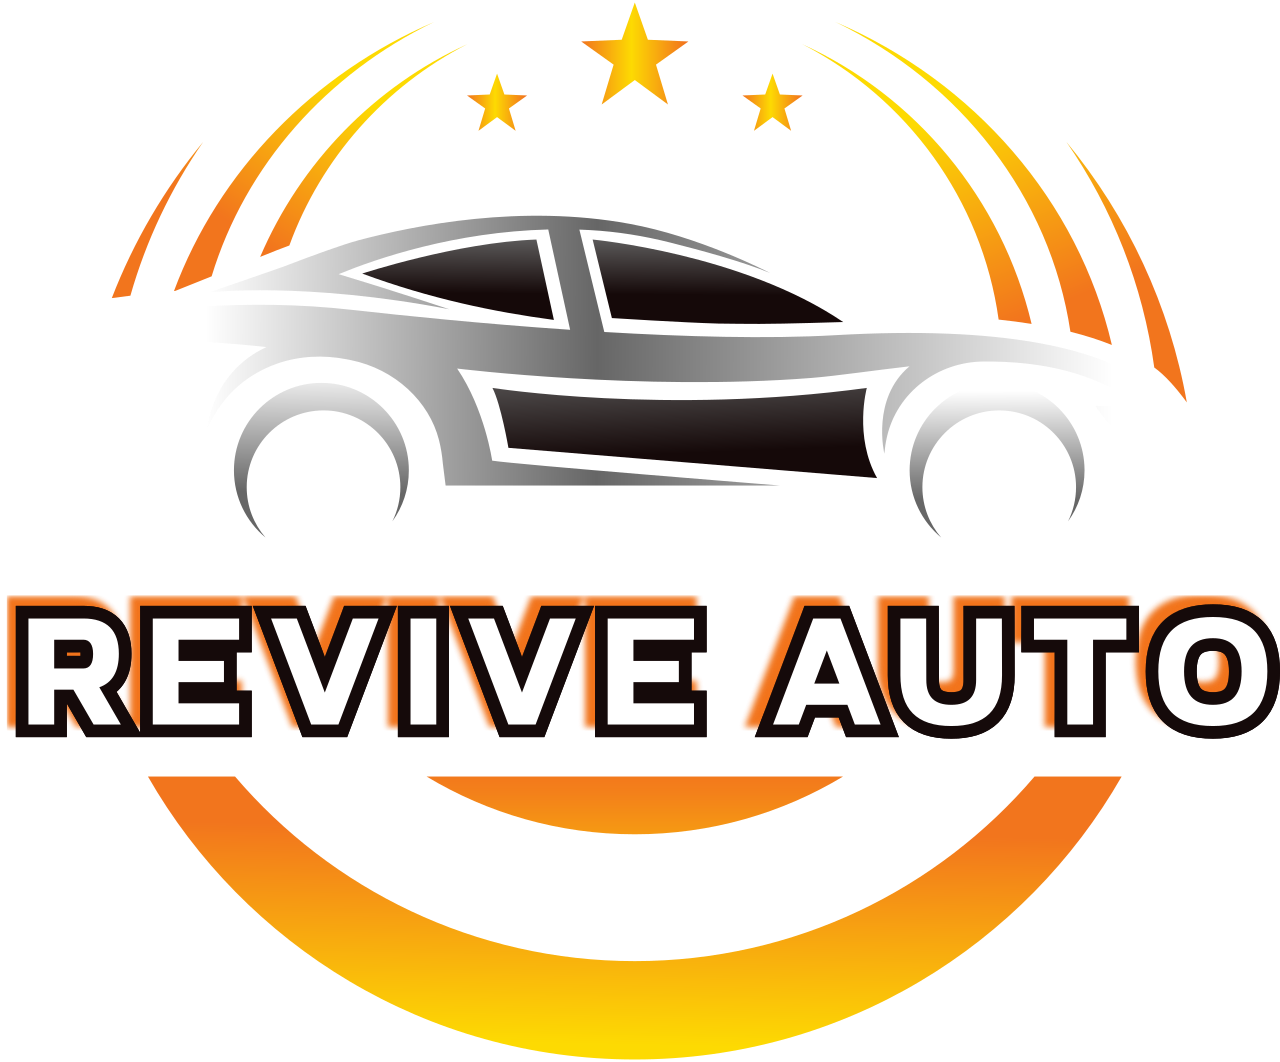 Revive Auto's logo